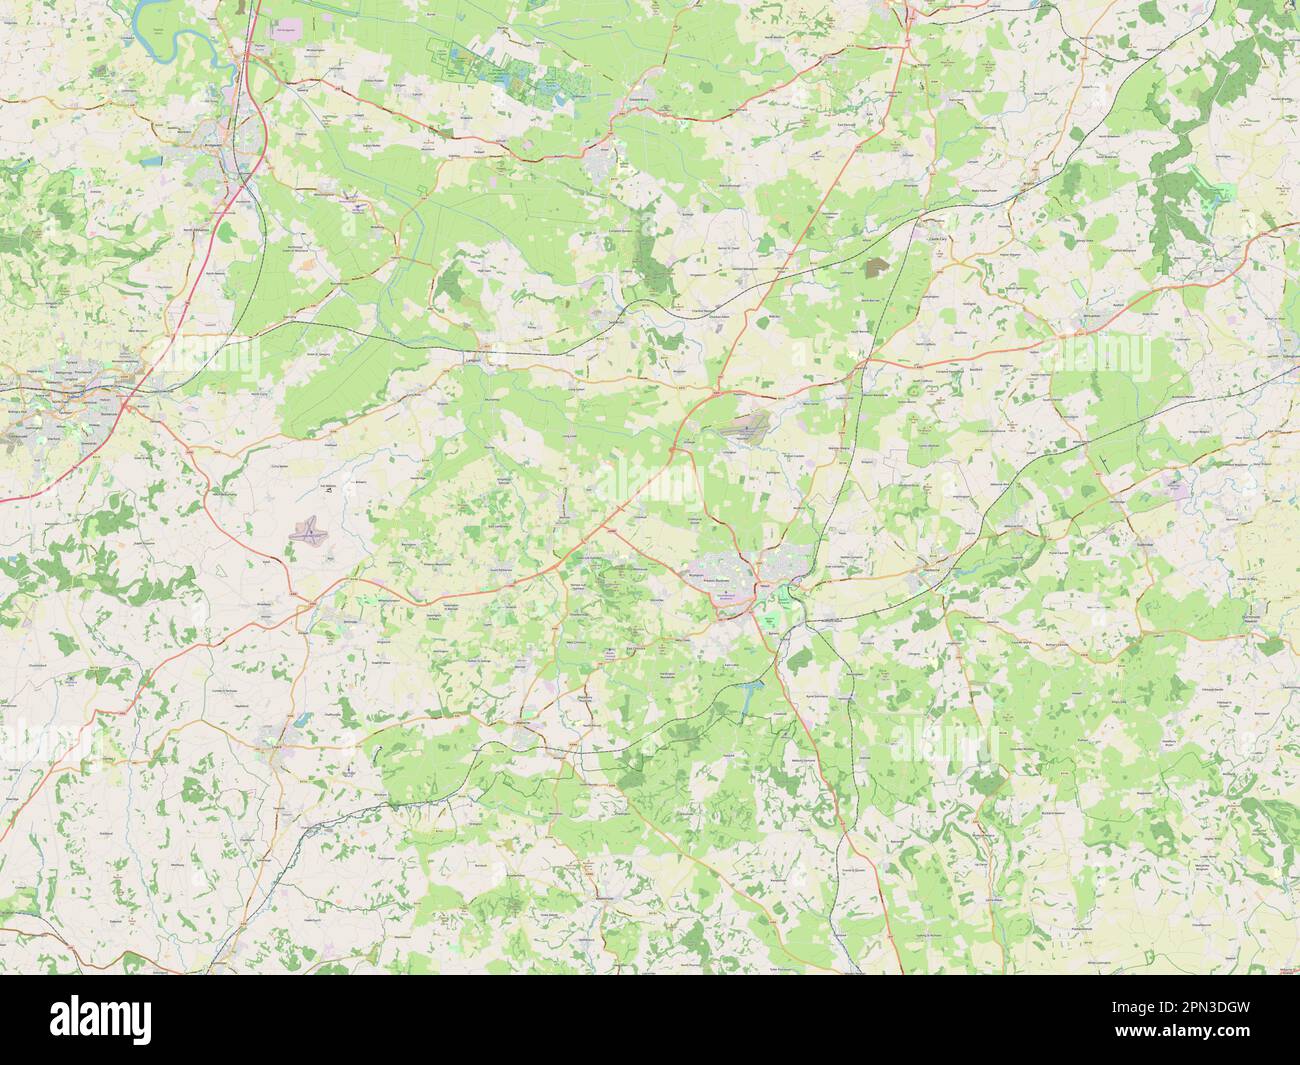 South Somerset, non metropolitan district of England - Great Britain. Open Street Map Stock Photo